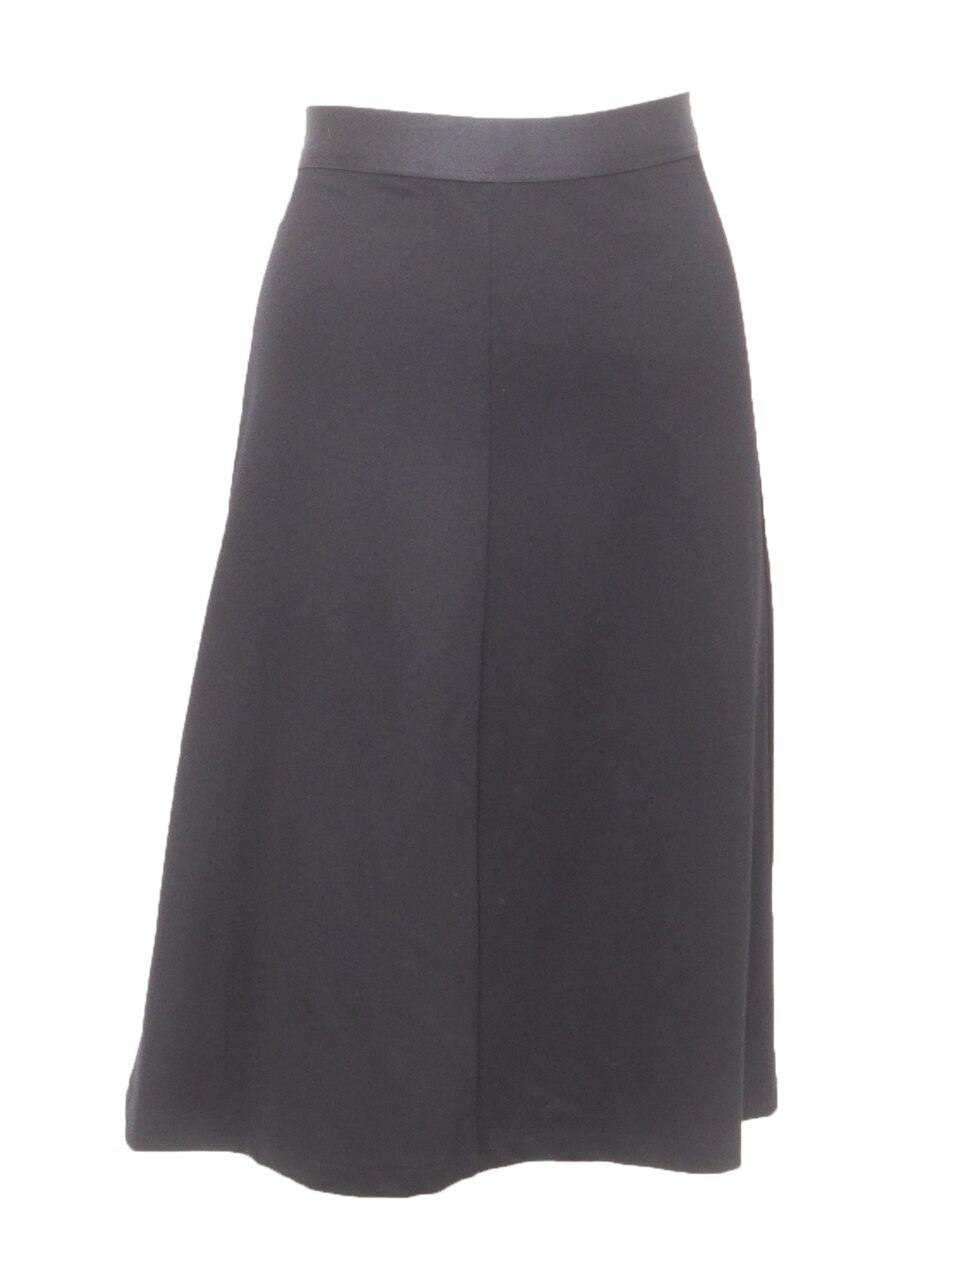 Lillian & Co Black A-line Skirt vendor-unknown